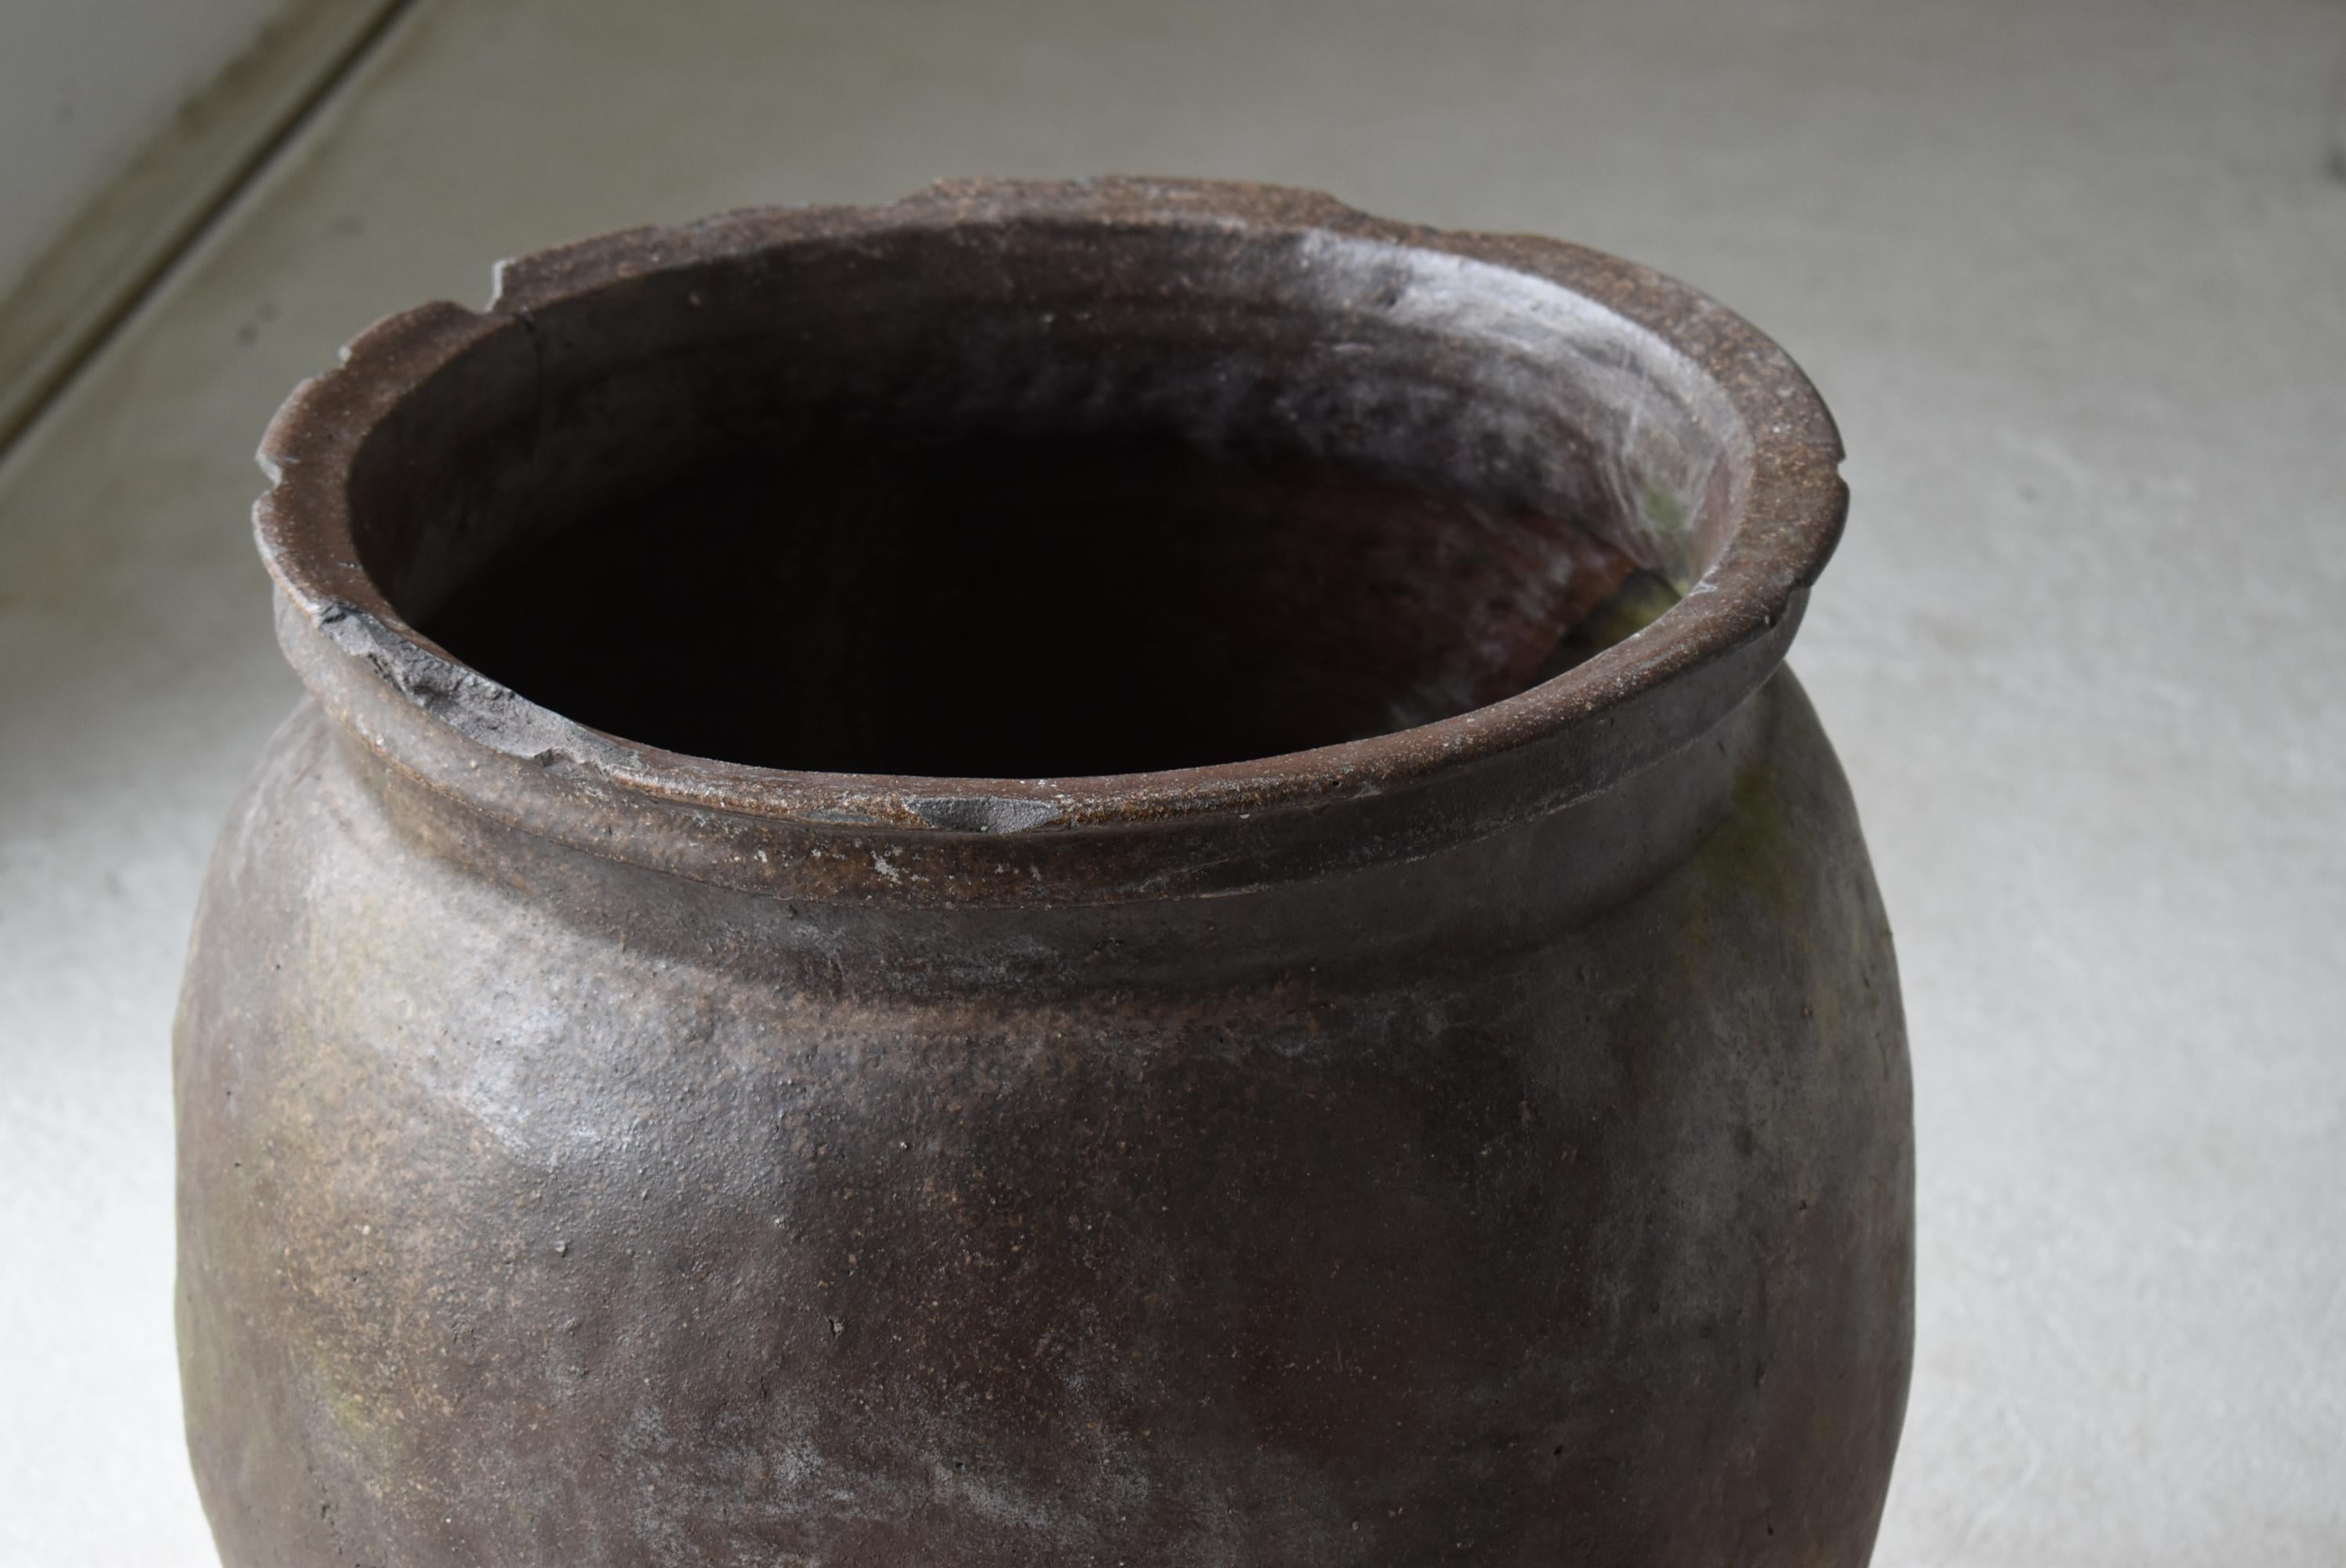 Edo Japanese Old Pottery 1700s-1800s/Antique Flower Vase Vessel Jar Tsubo Ceramic